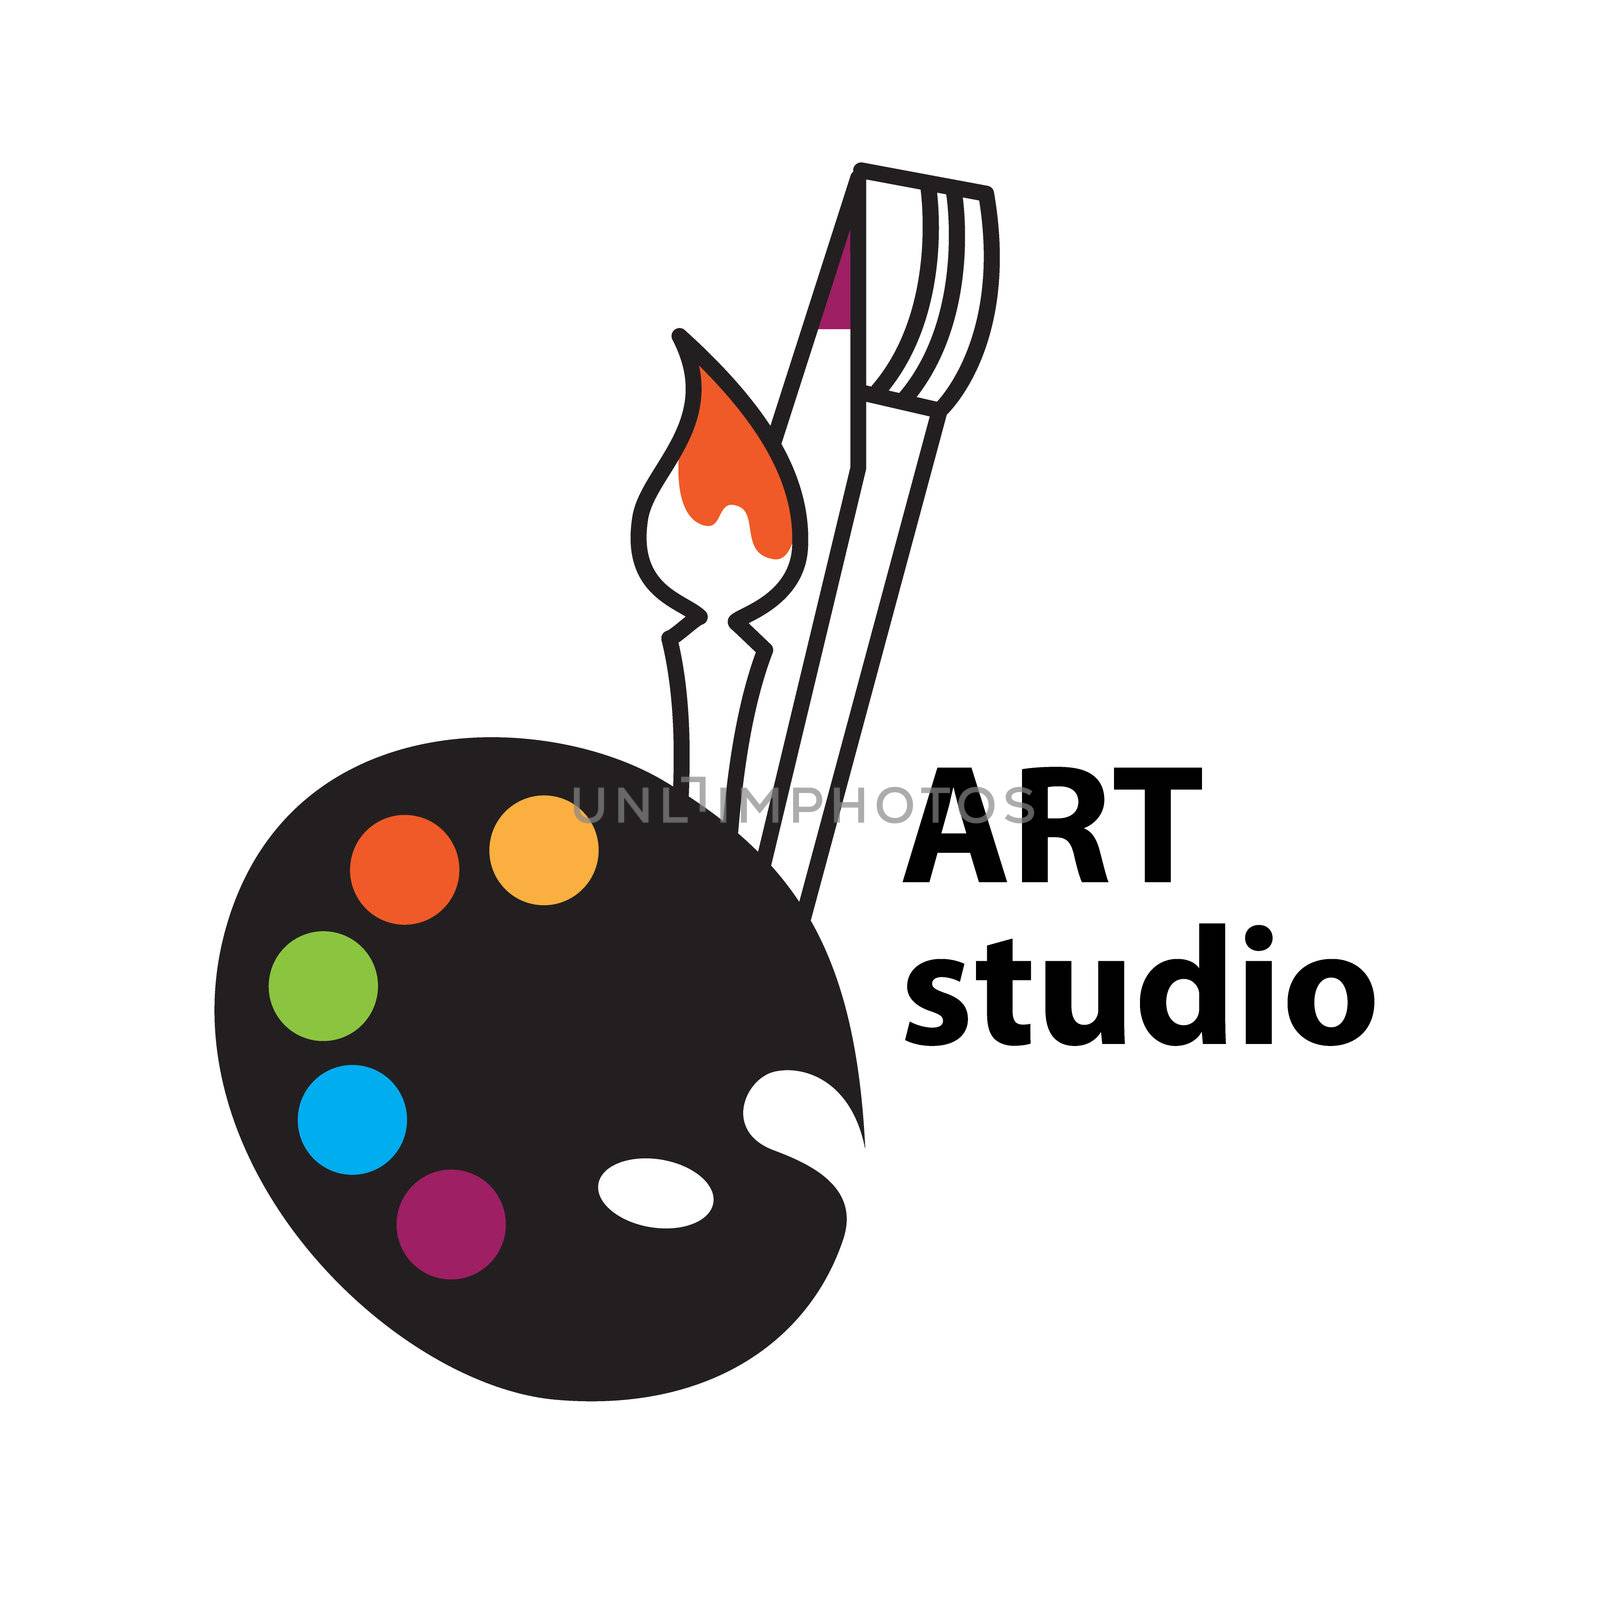 Art-studio sign - Vector Brush and Palette Icon